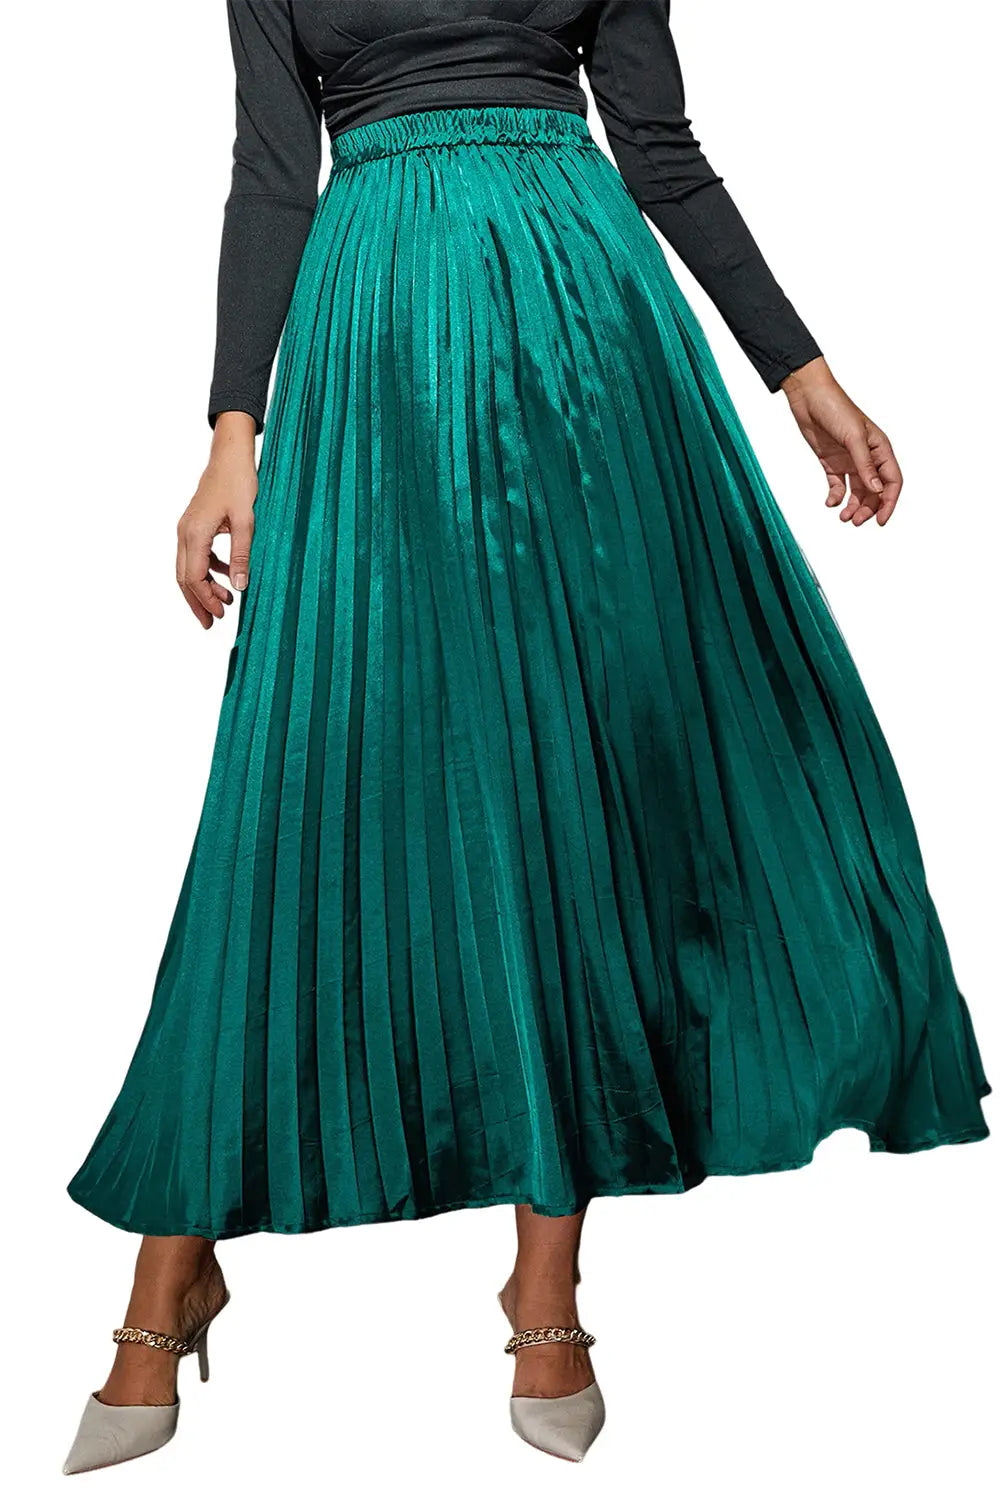 Blackish green satin elastic waist pleated maxi skirt - skirts